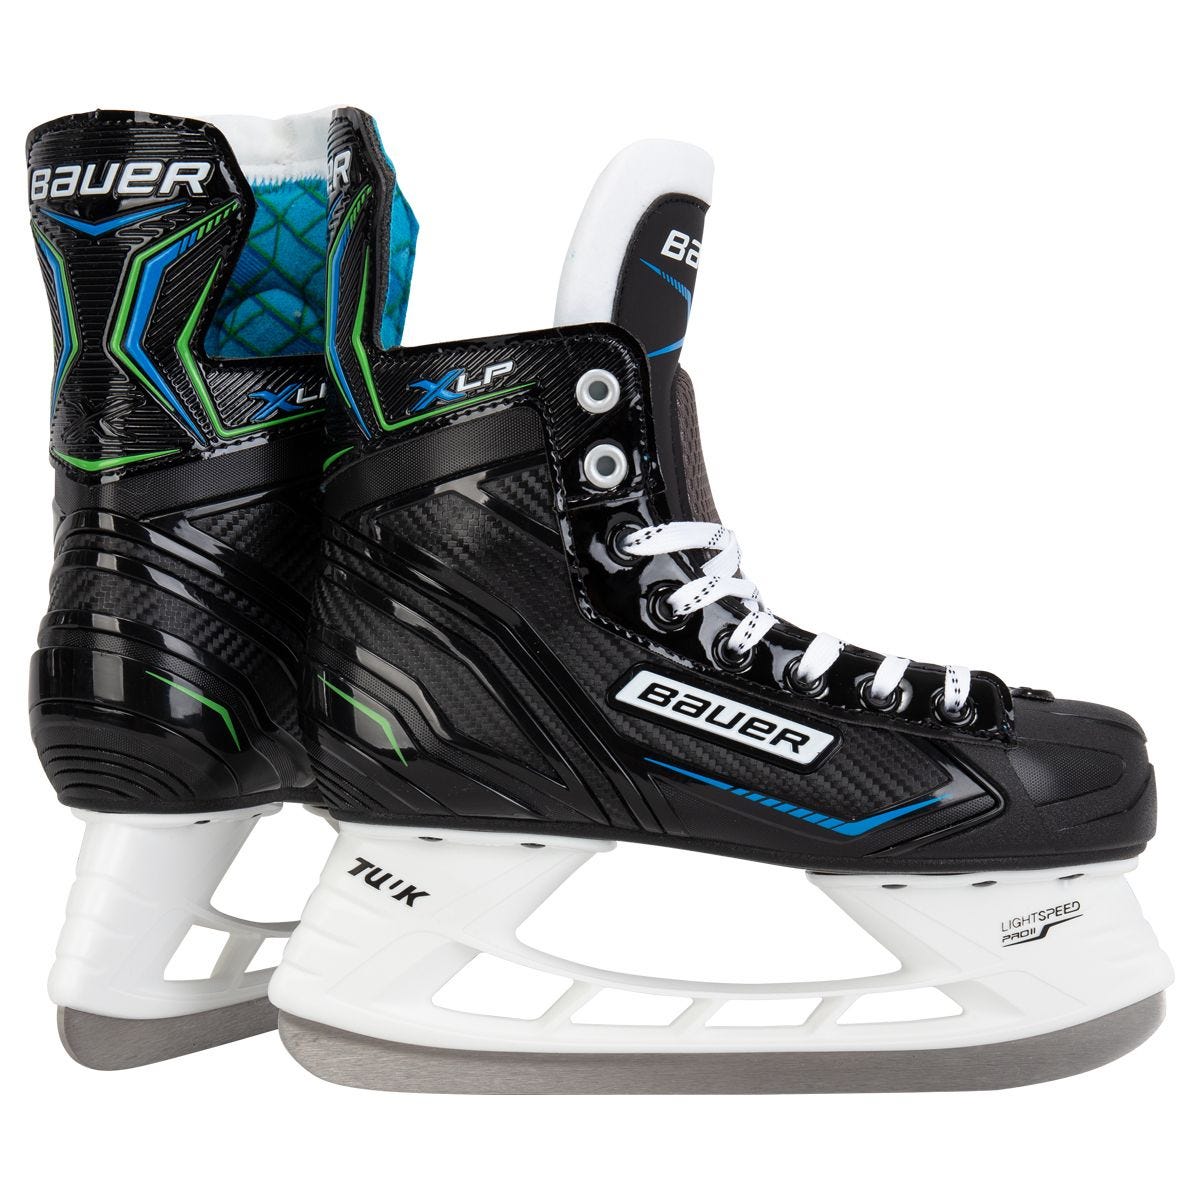 Bauer X-LP Jr. Hockey Skatesproduct zoom image #1